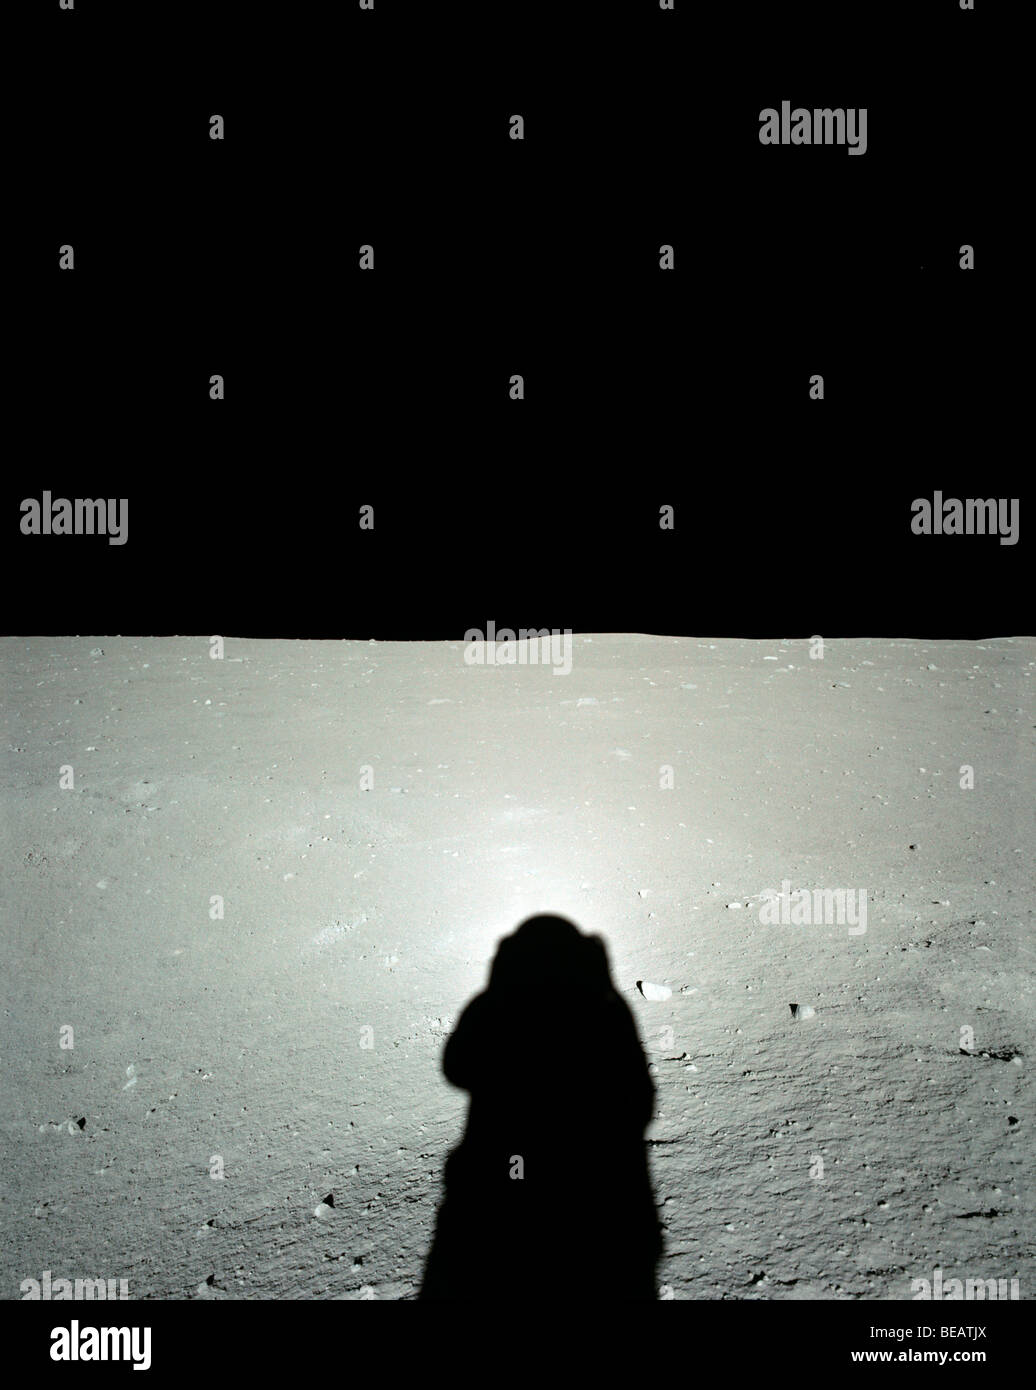 Shadow of Apollo 11 astronaut cast across the lunar surface. Optimised and enhanced version of original NASA image Credit NASA Stock Photo